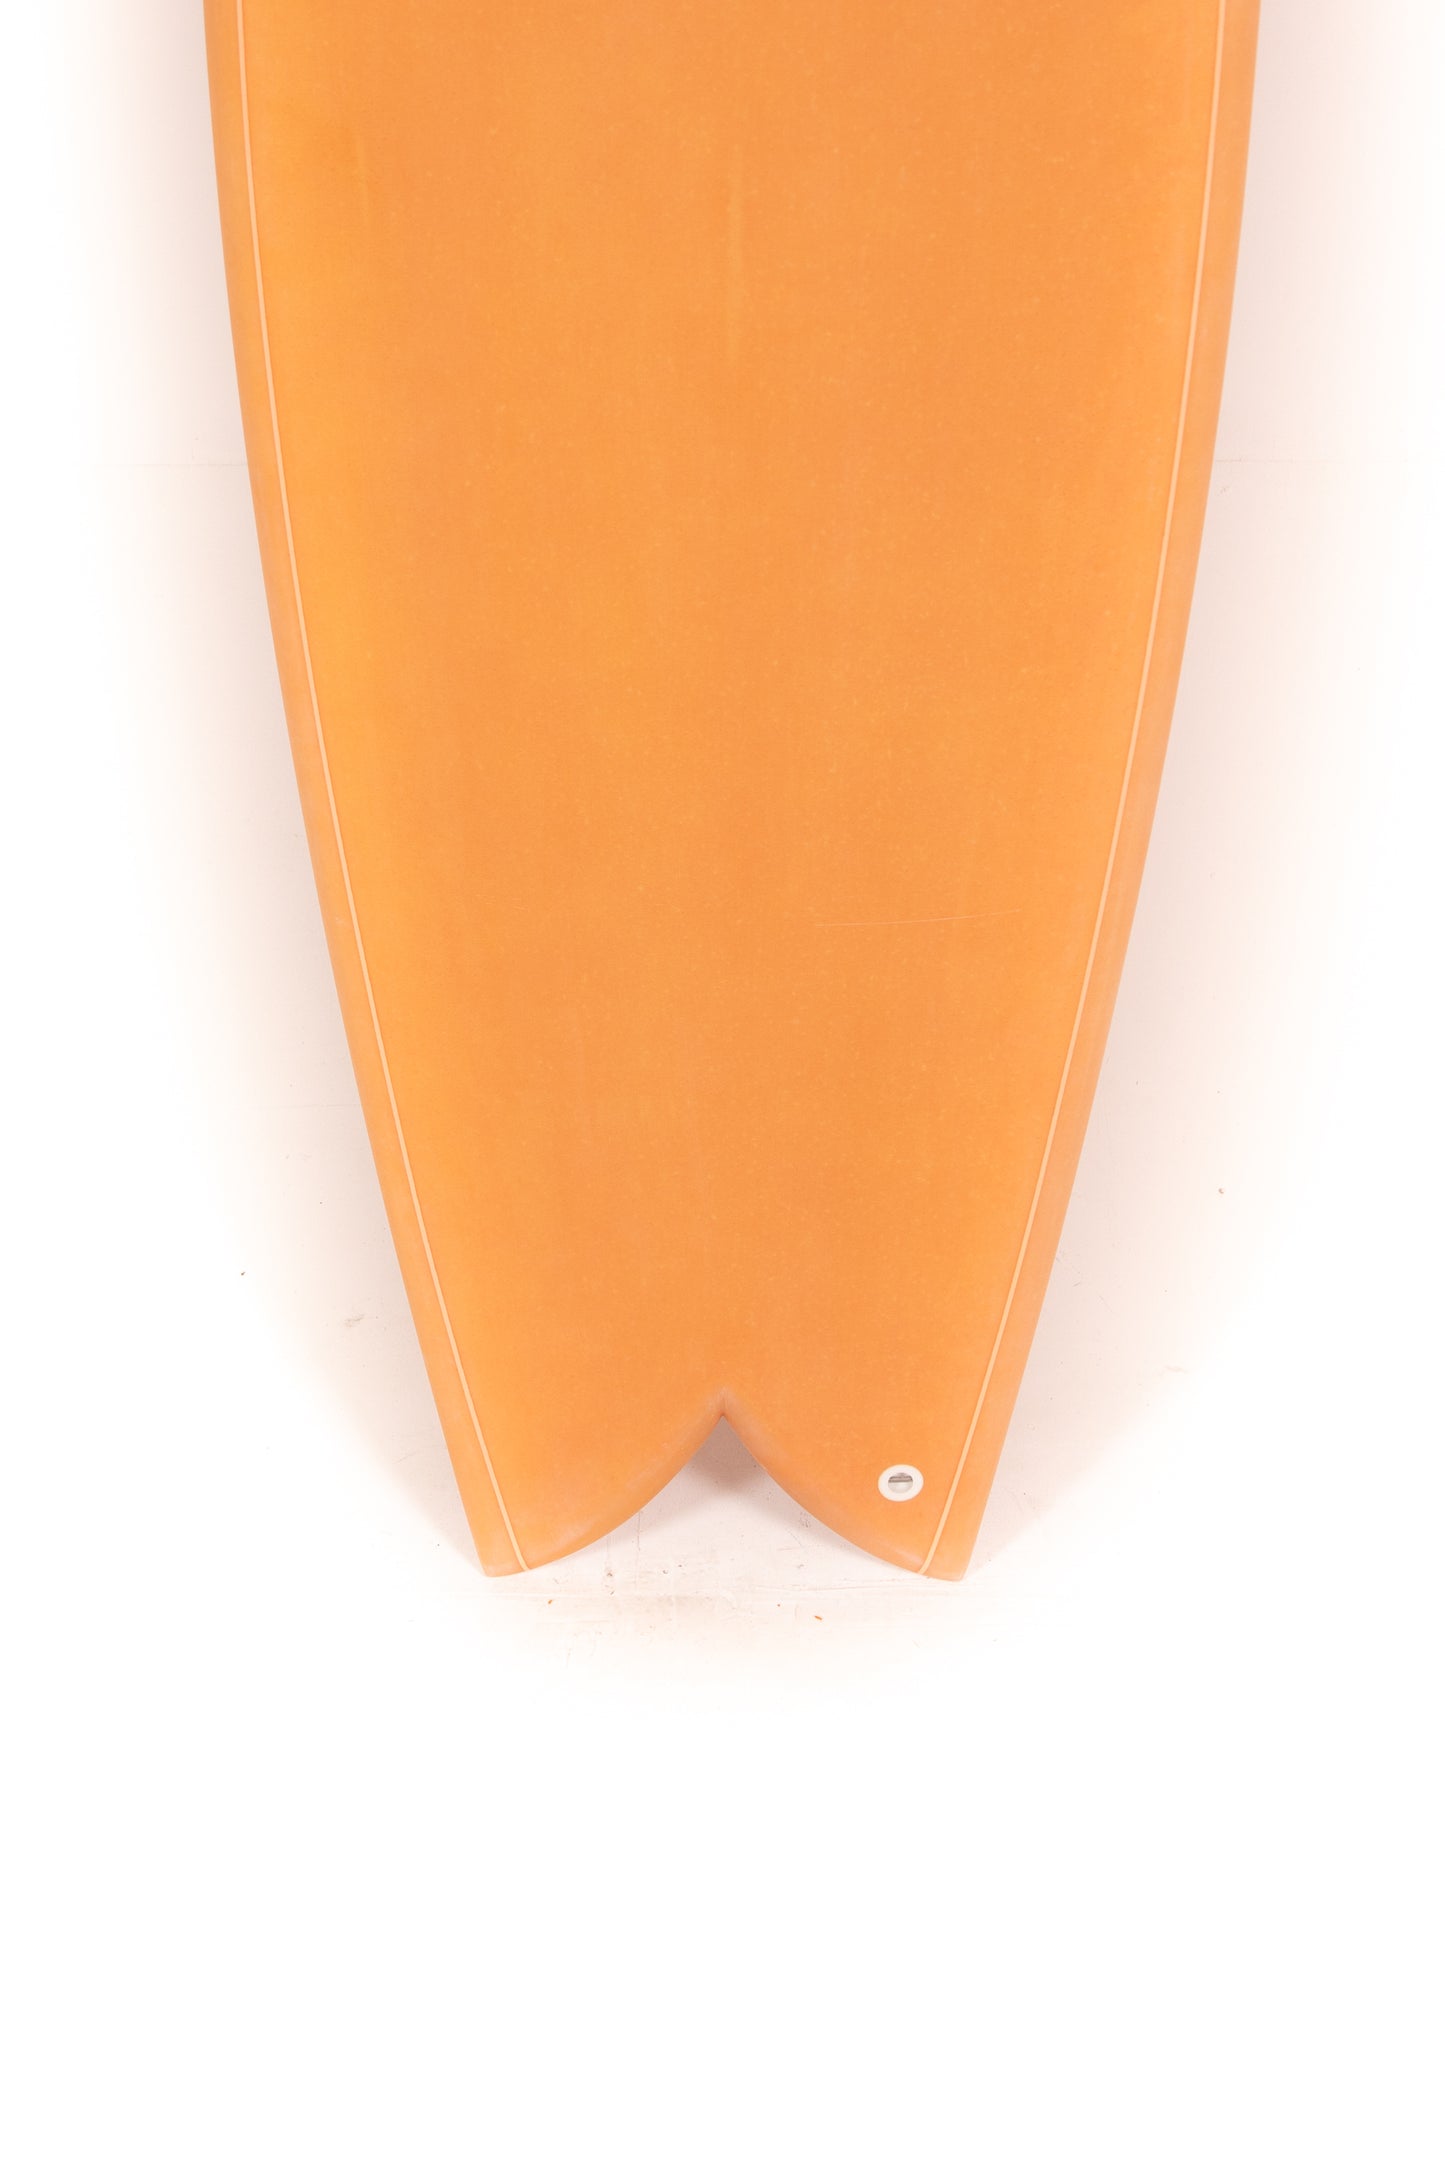 
                  
                    Pukas Surf Shop -  Indio Surfboards - DAB TERRACOTA FCS II - 5’9” x 21 1/8 x 2 9/16 x 37.60L.
                  
                